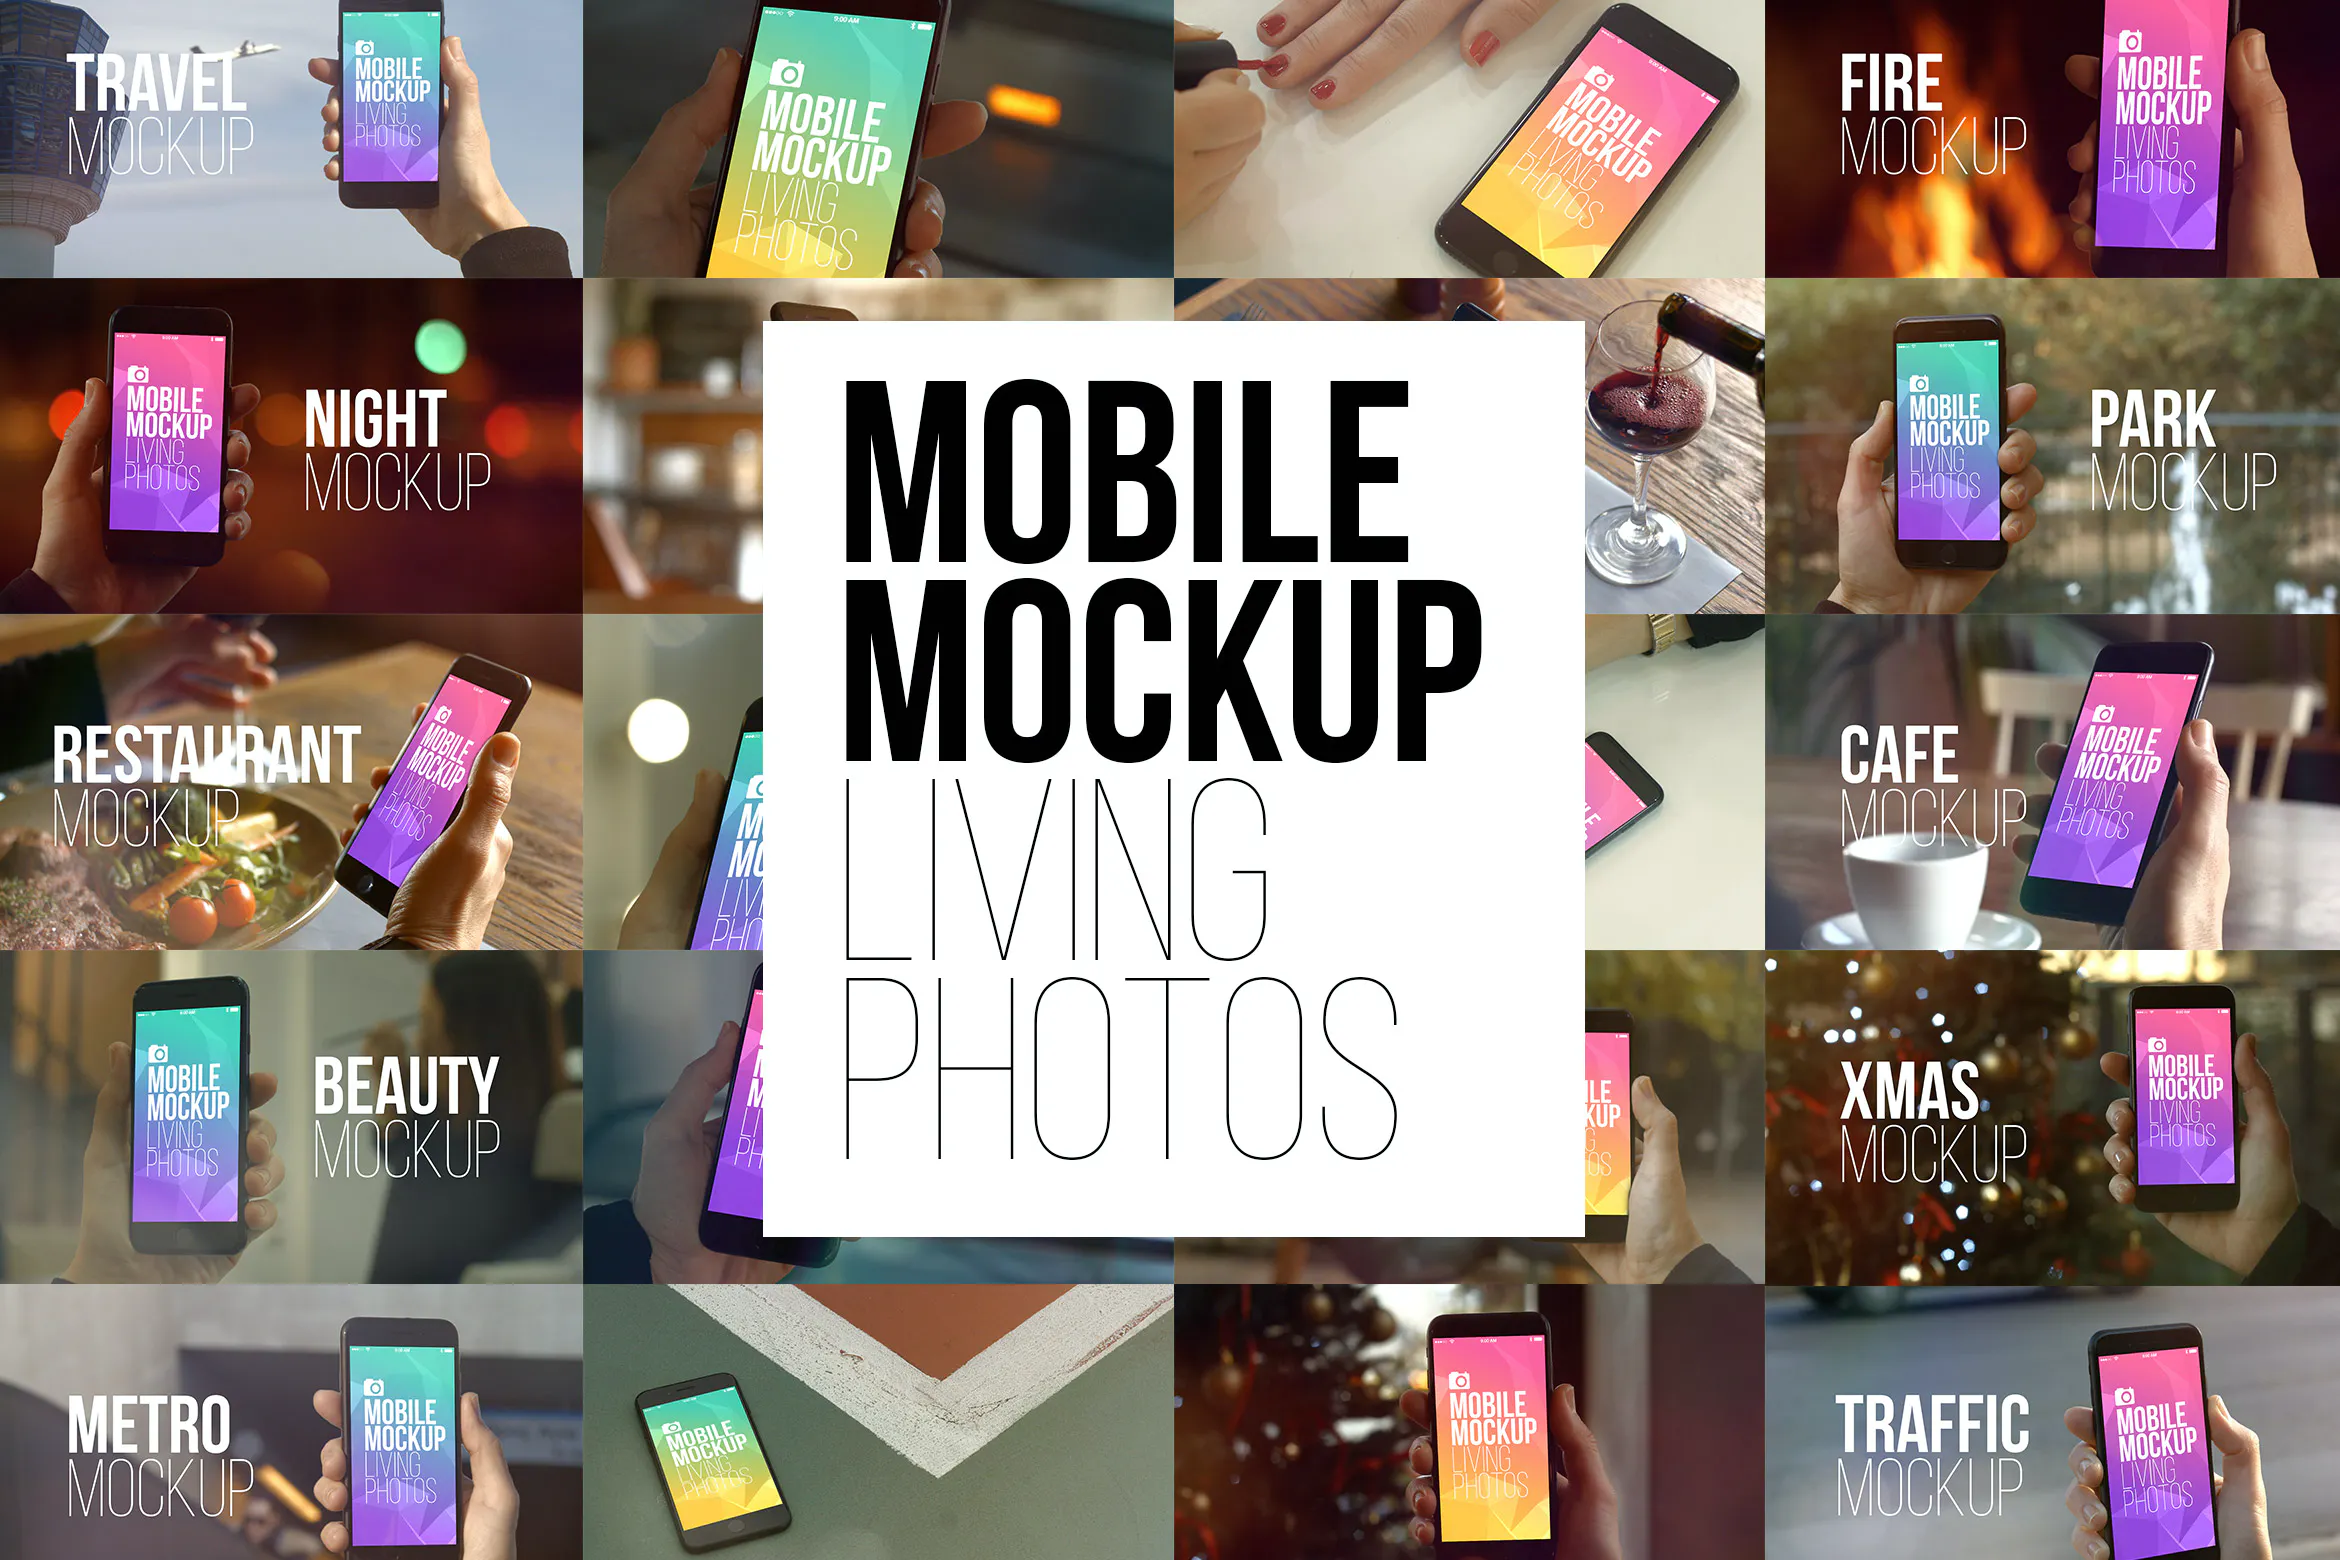 Mobile Mockup Living Photos